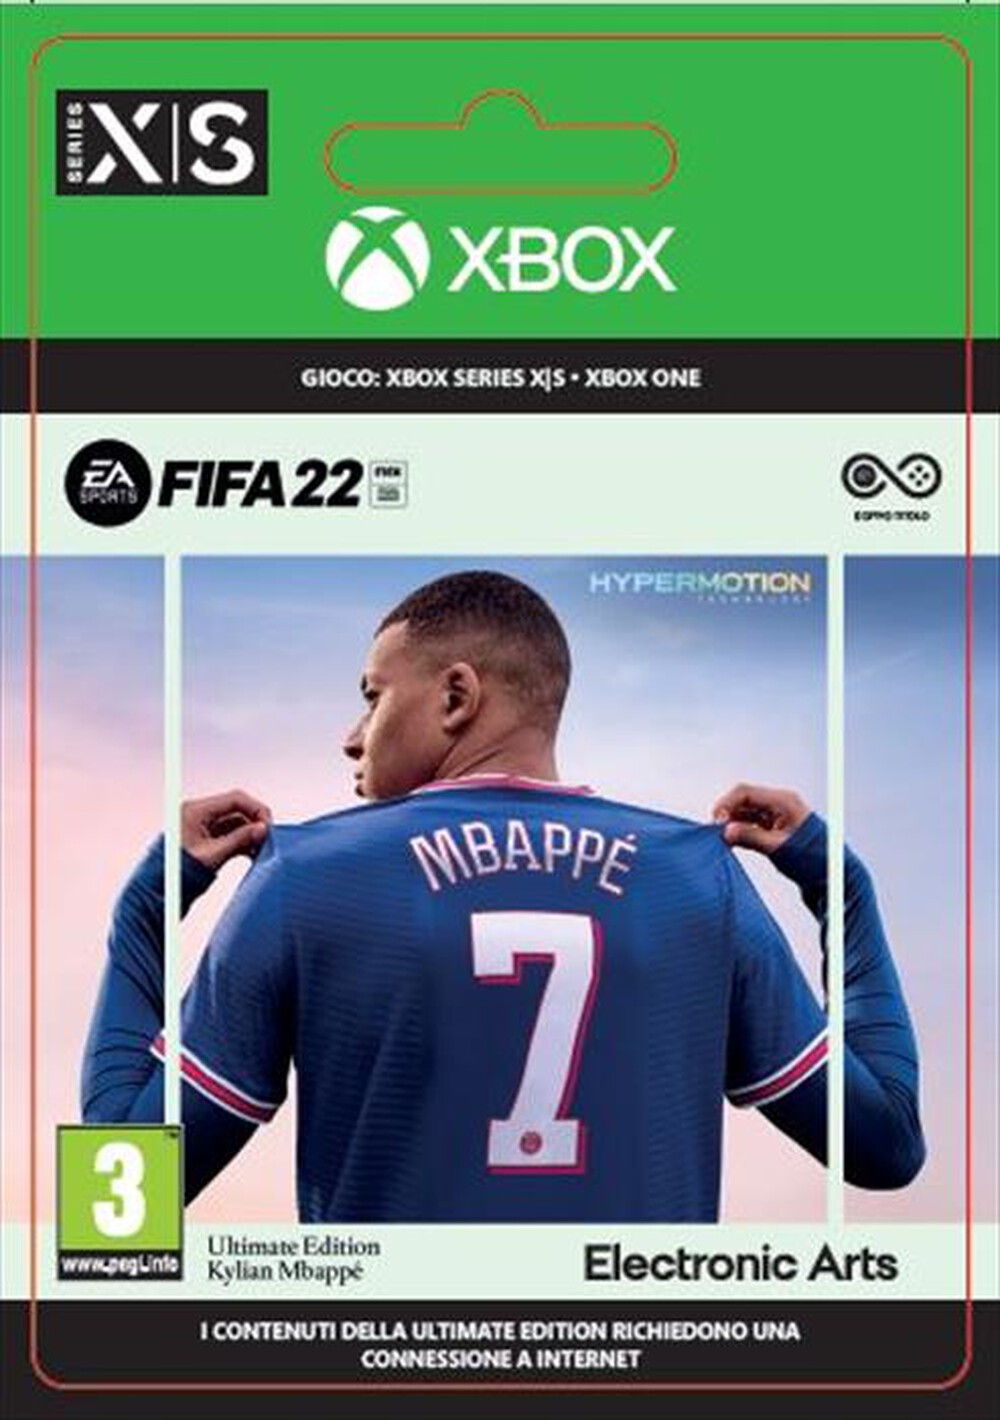 "MICROSOFT - FIFA 22 Ultimate Edition"